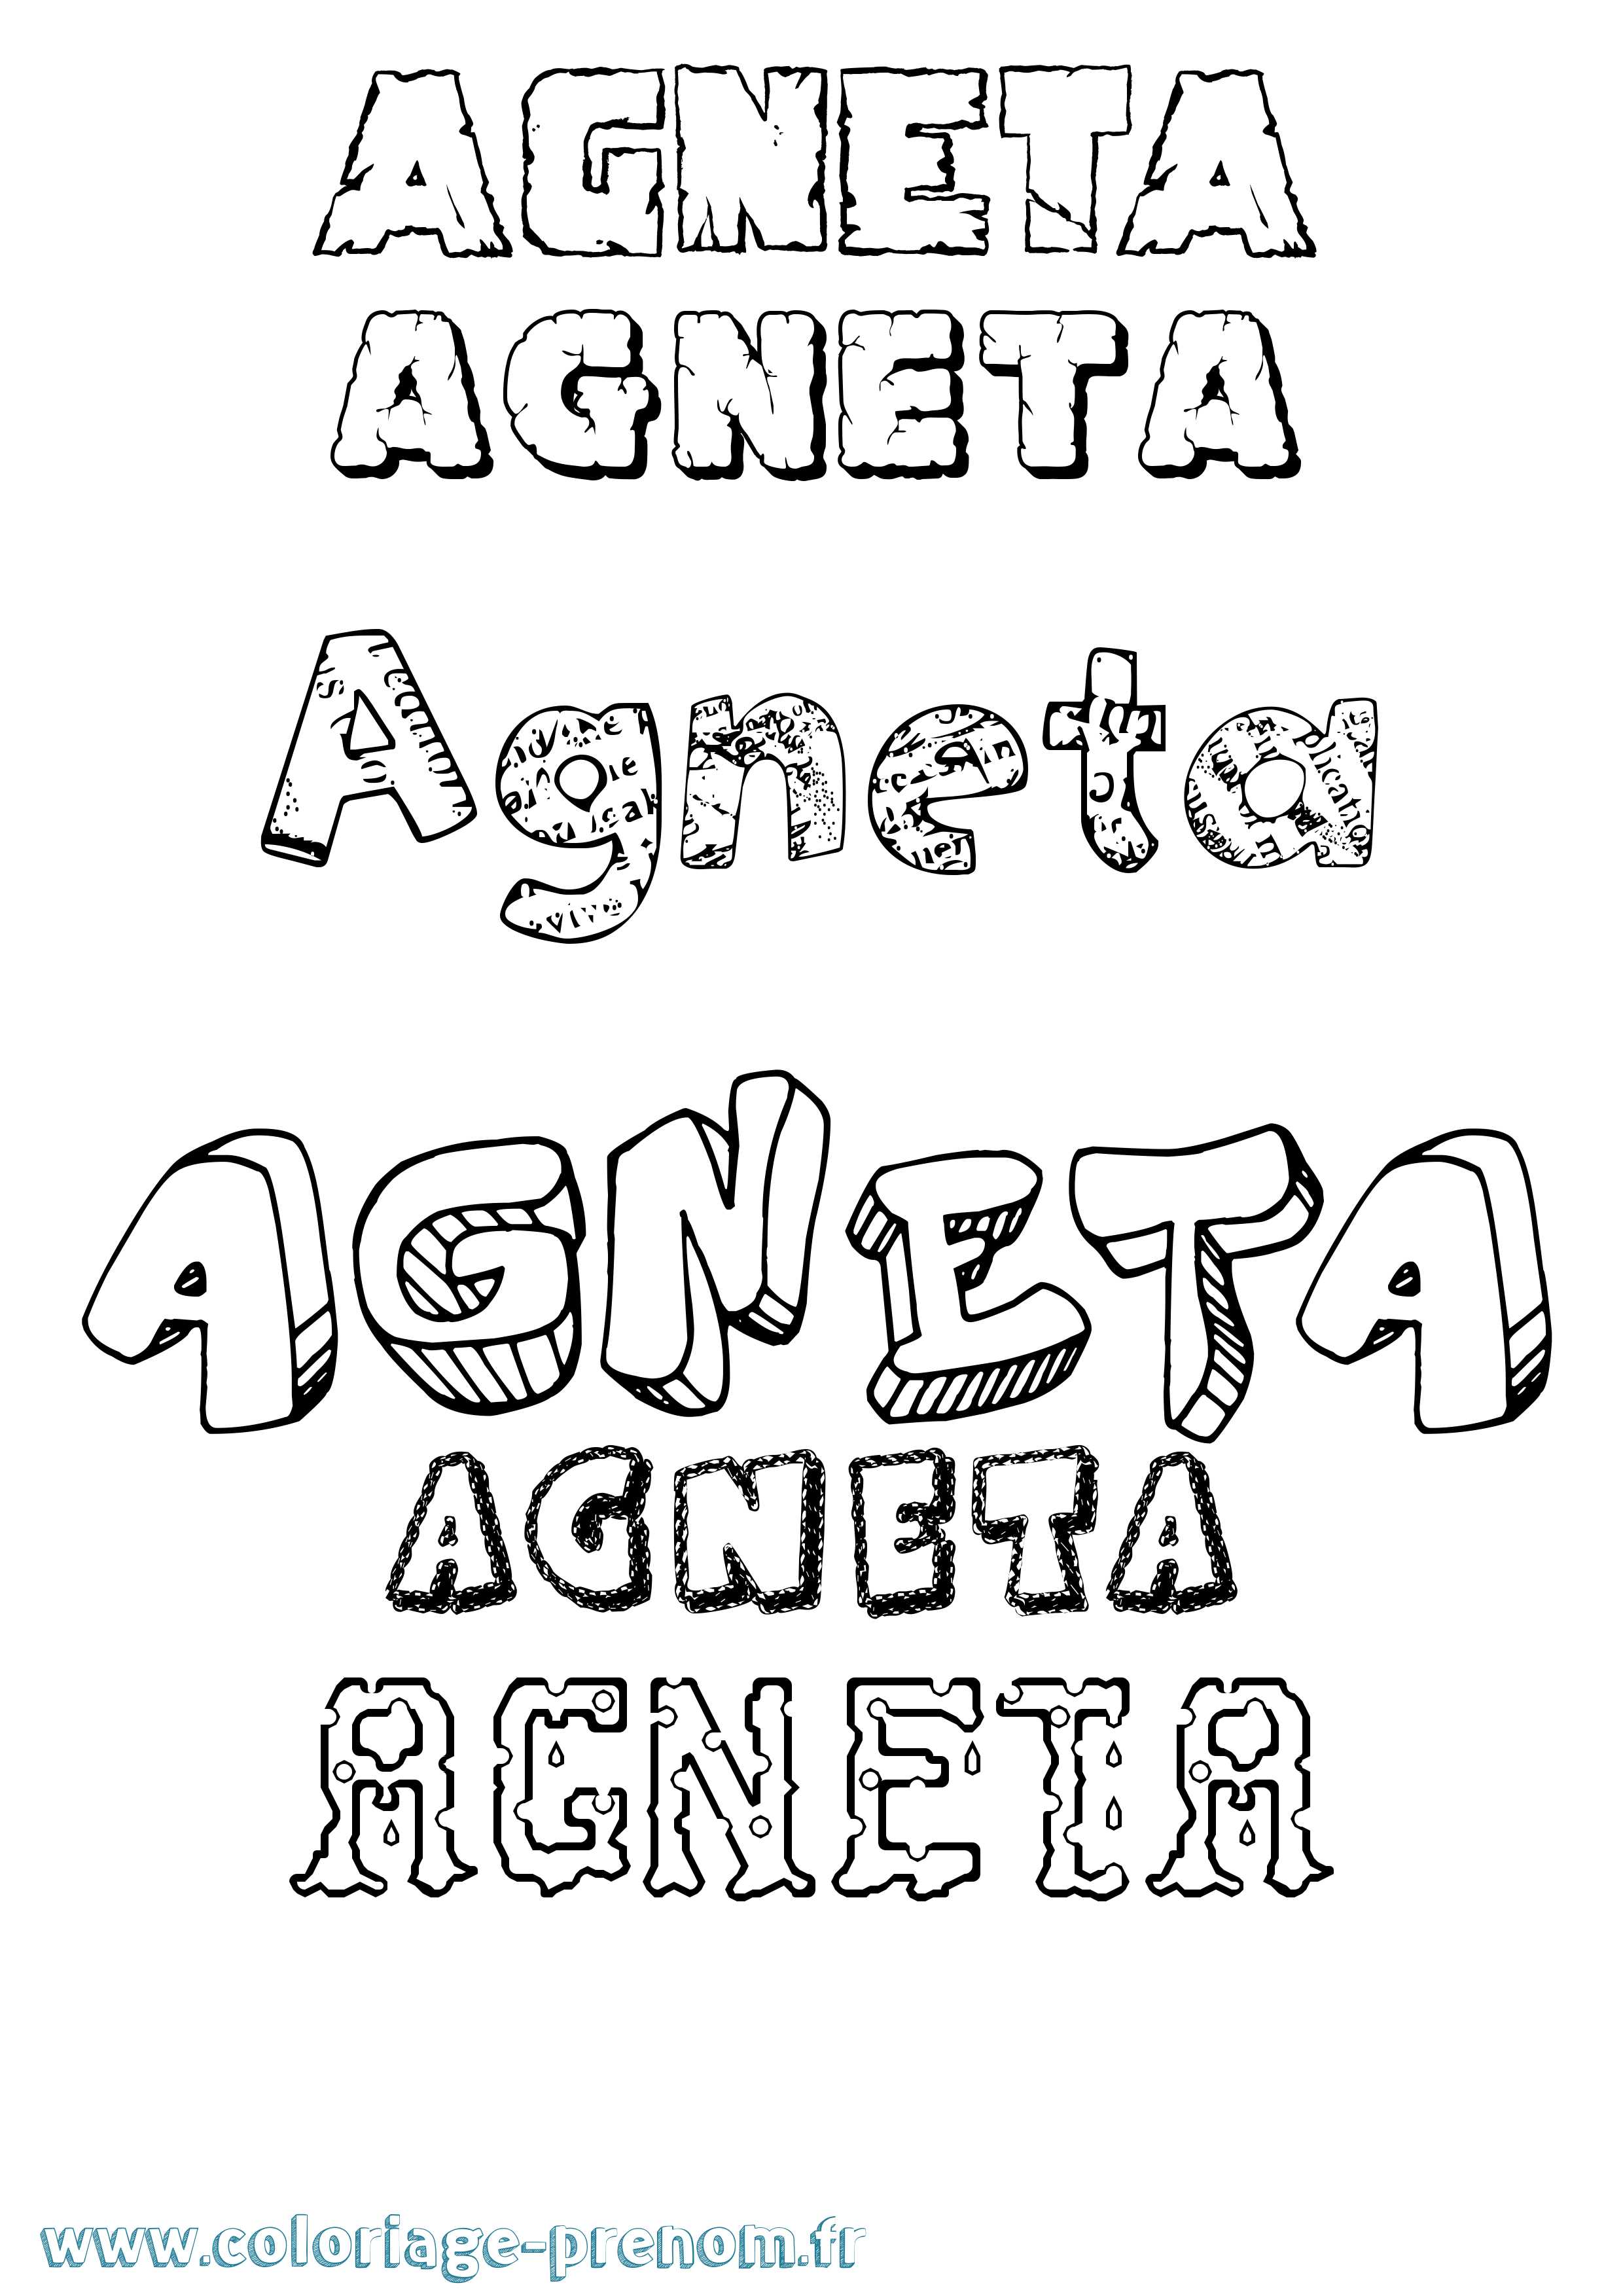 Coloriage prénom Agneta Destructuré